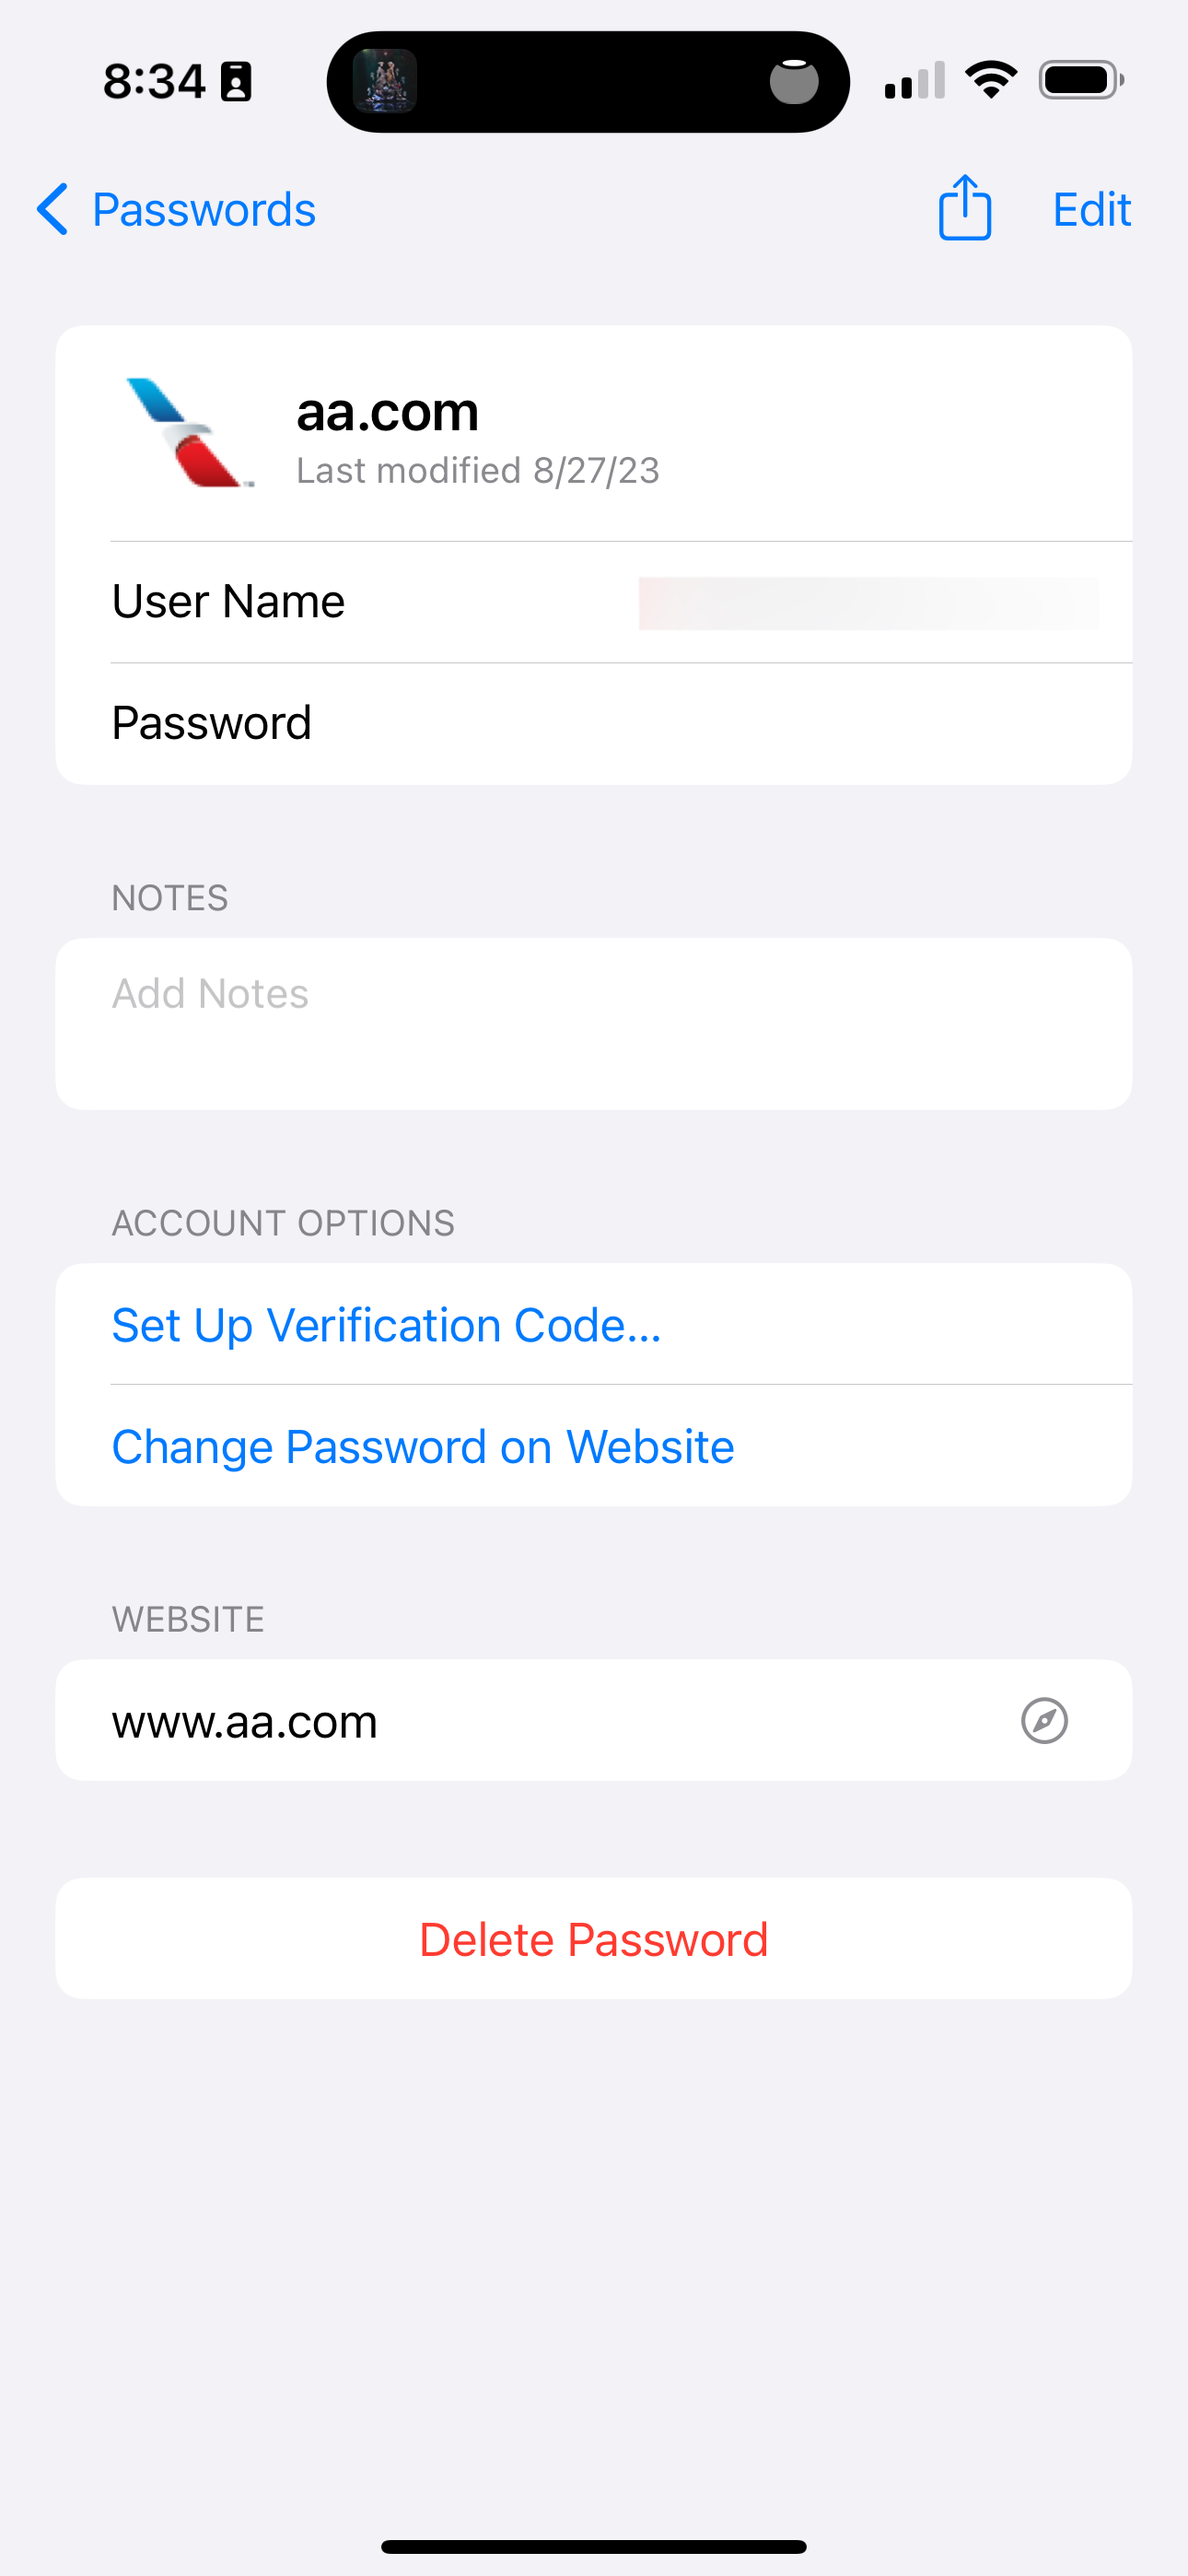 iphone icloud keychain view password details